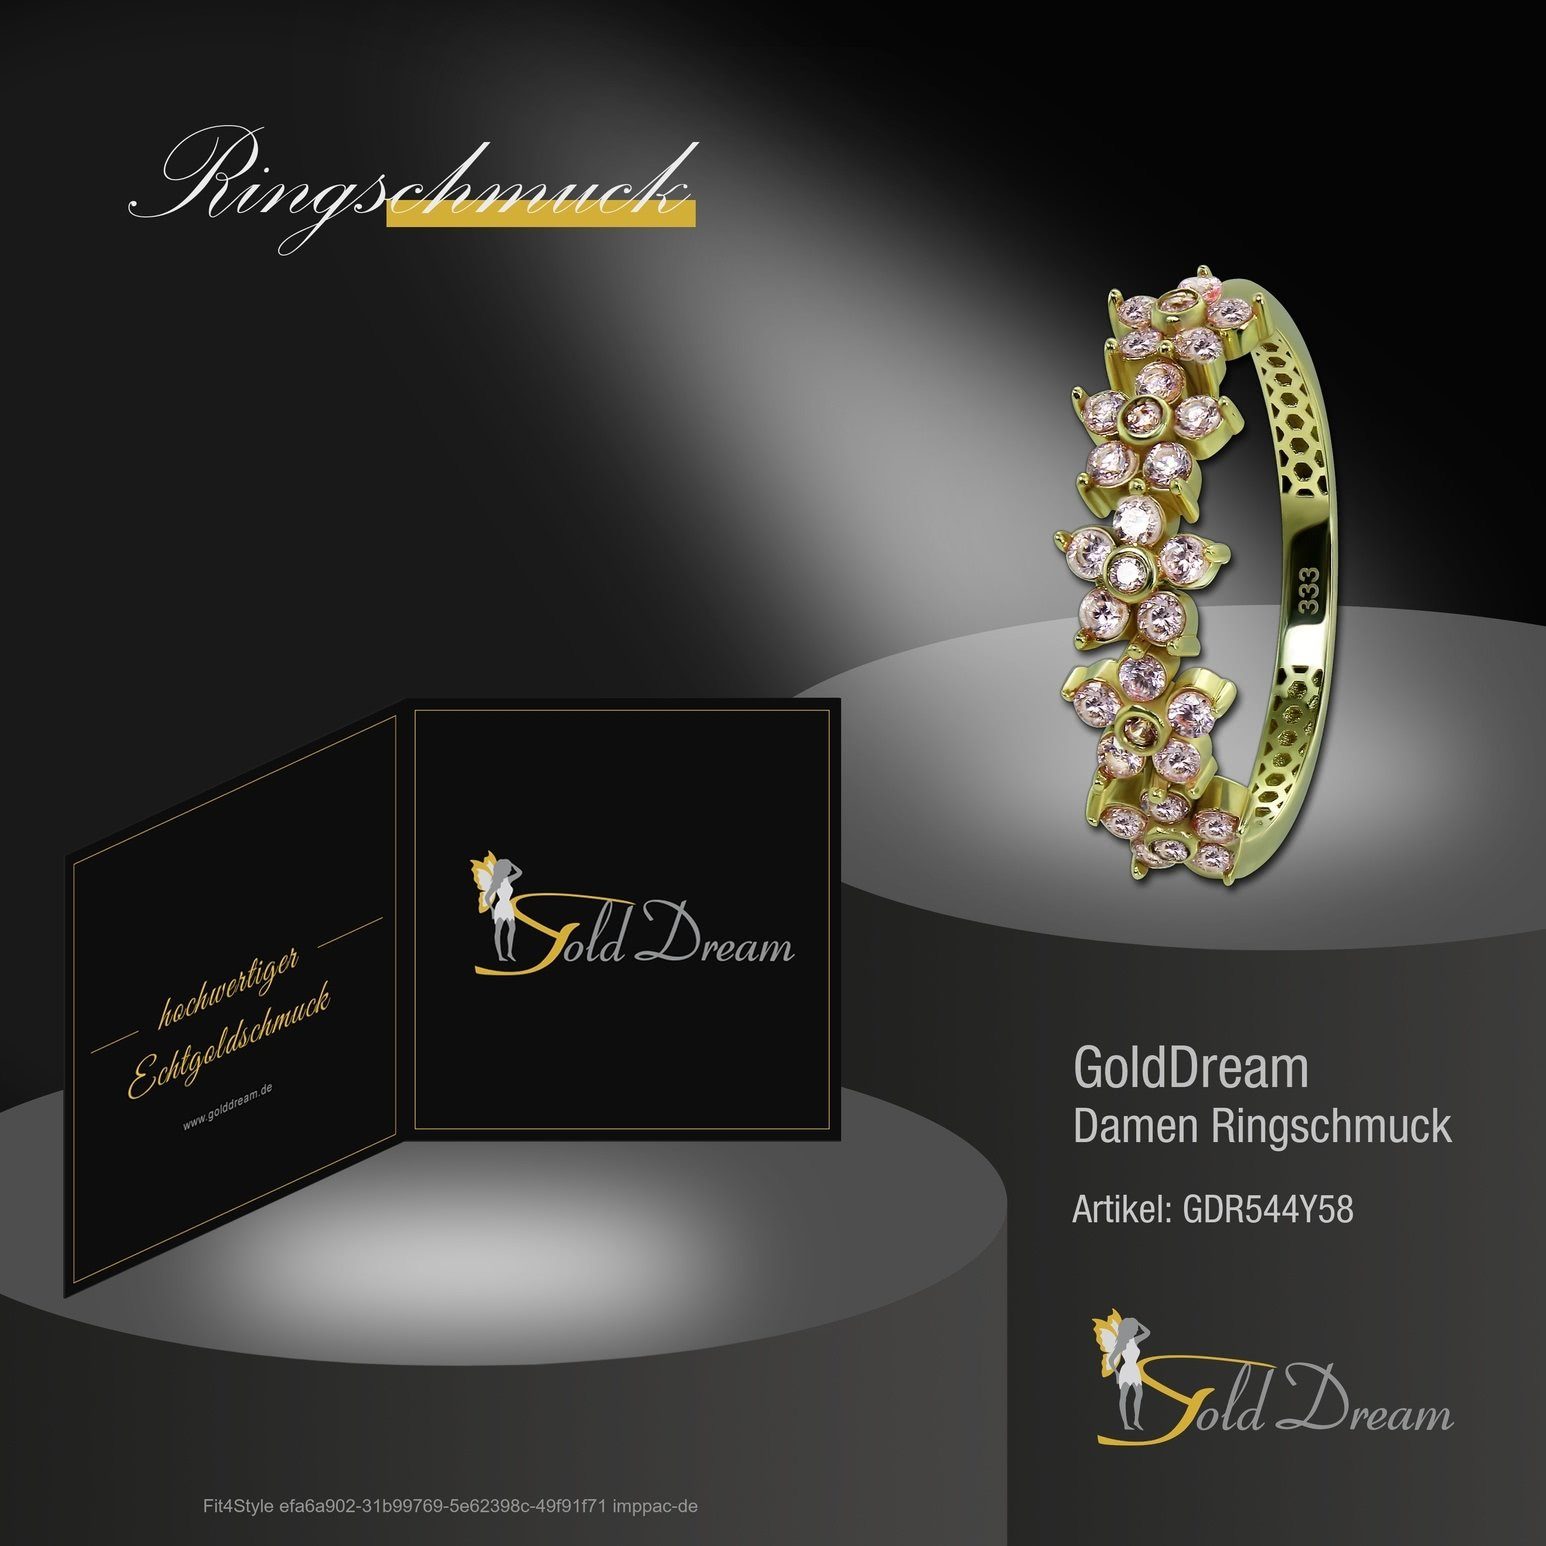 GoldDream (Fingerring), Farbe: Blumen gold, Goldring Gold Gr.58 8 Blumen rosa Karat, 333 Gelbgold Damen - Ring Ring GoldDream